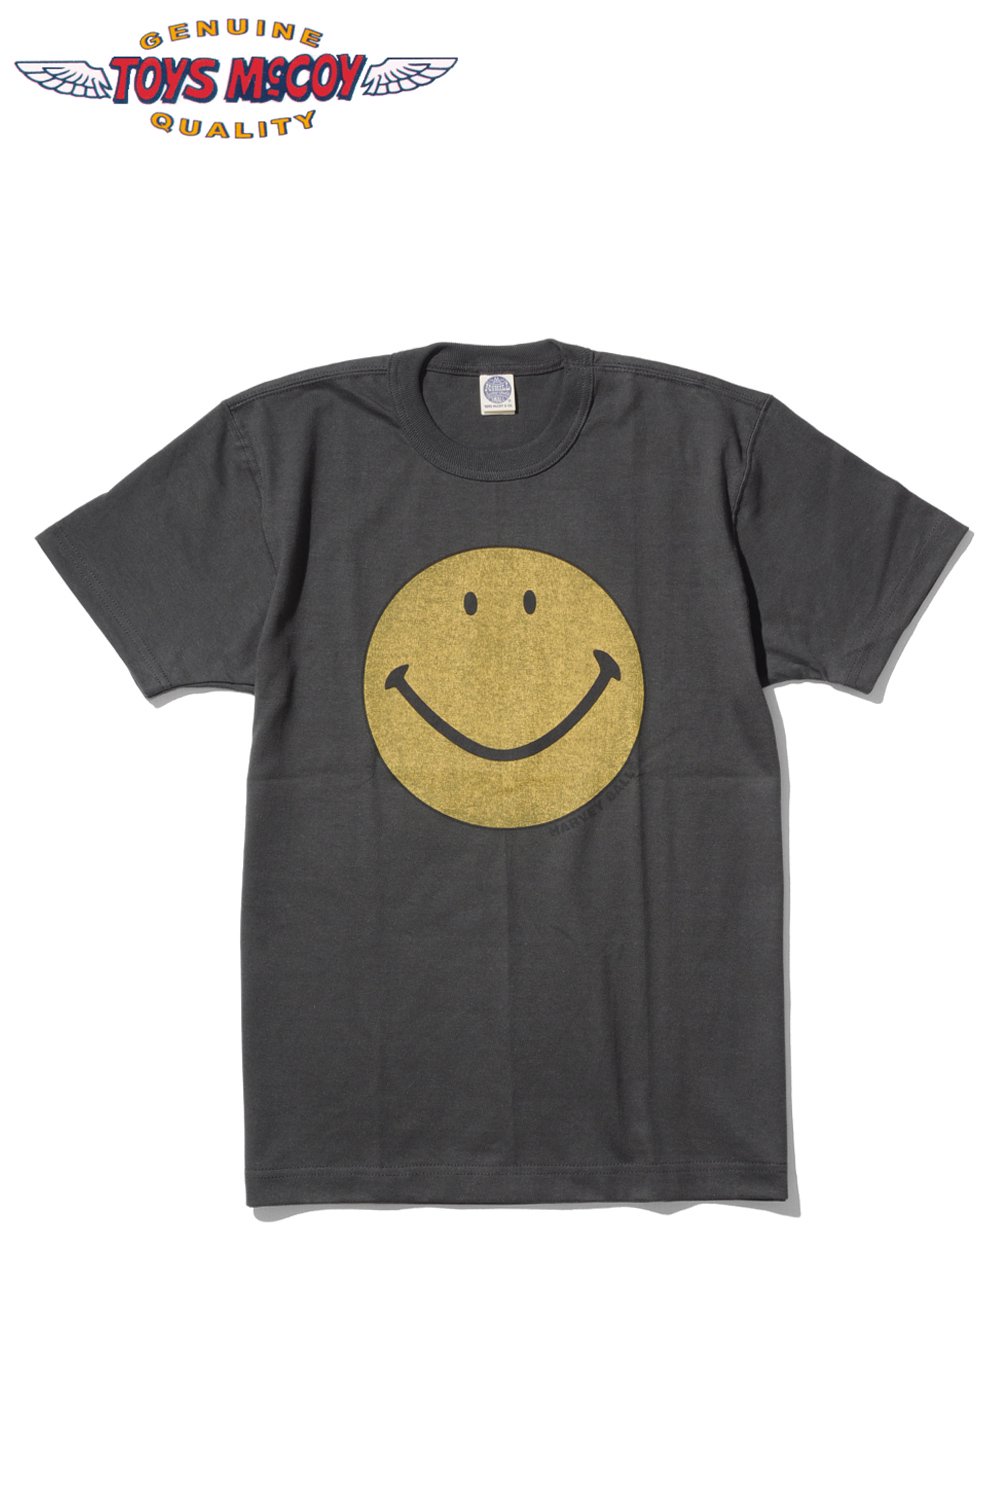 TOYS McCOY(トイズマッコイ) Tシャツ SMILE TEE "WE SMILE MORE" TMC1802 通販正規取扱 | ハーレムストア